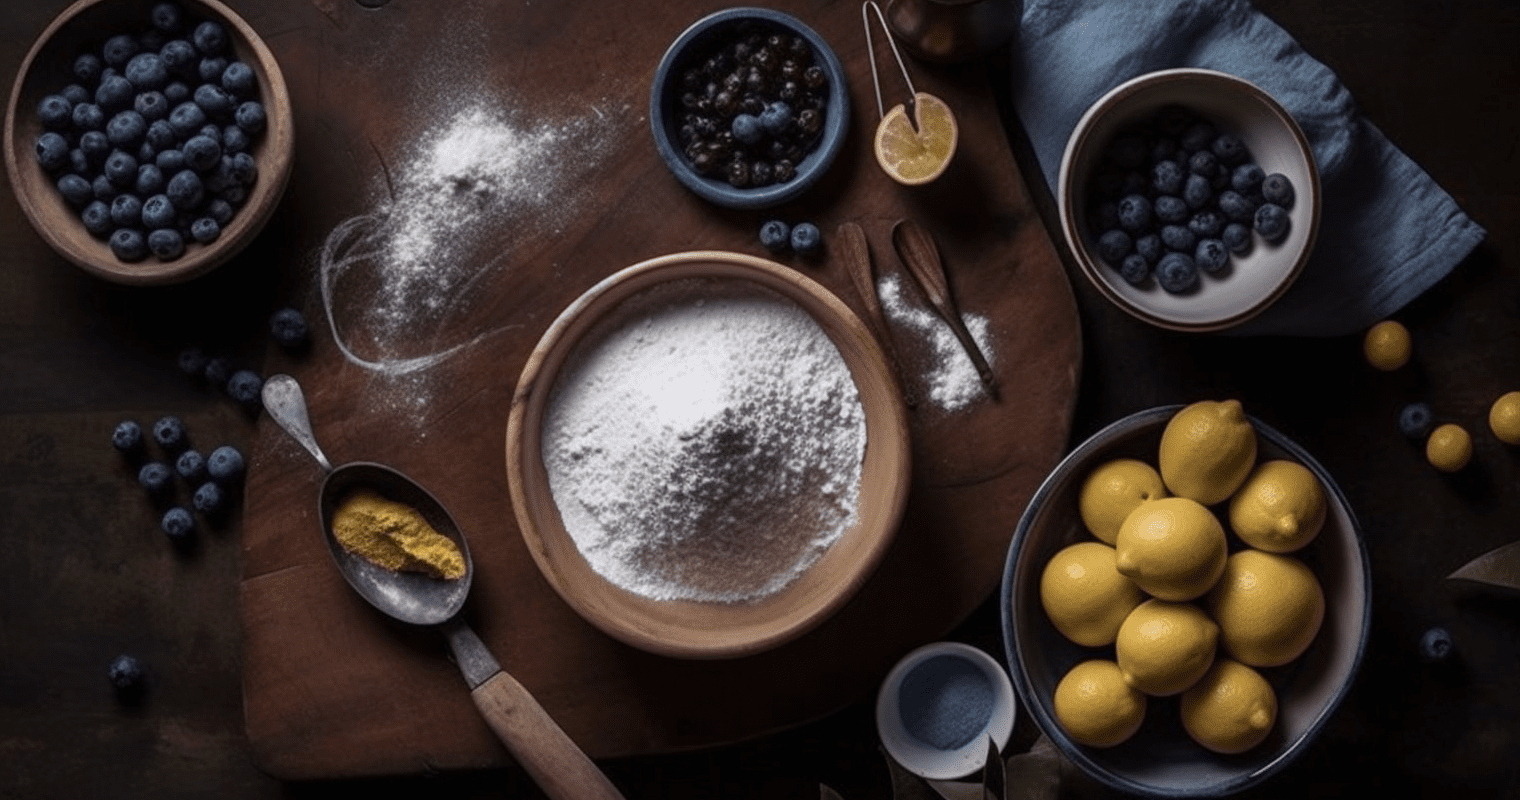 Lemon Blueberry Pound Cake Cooking Instructions